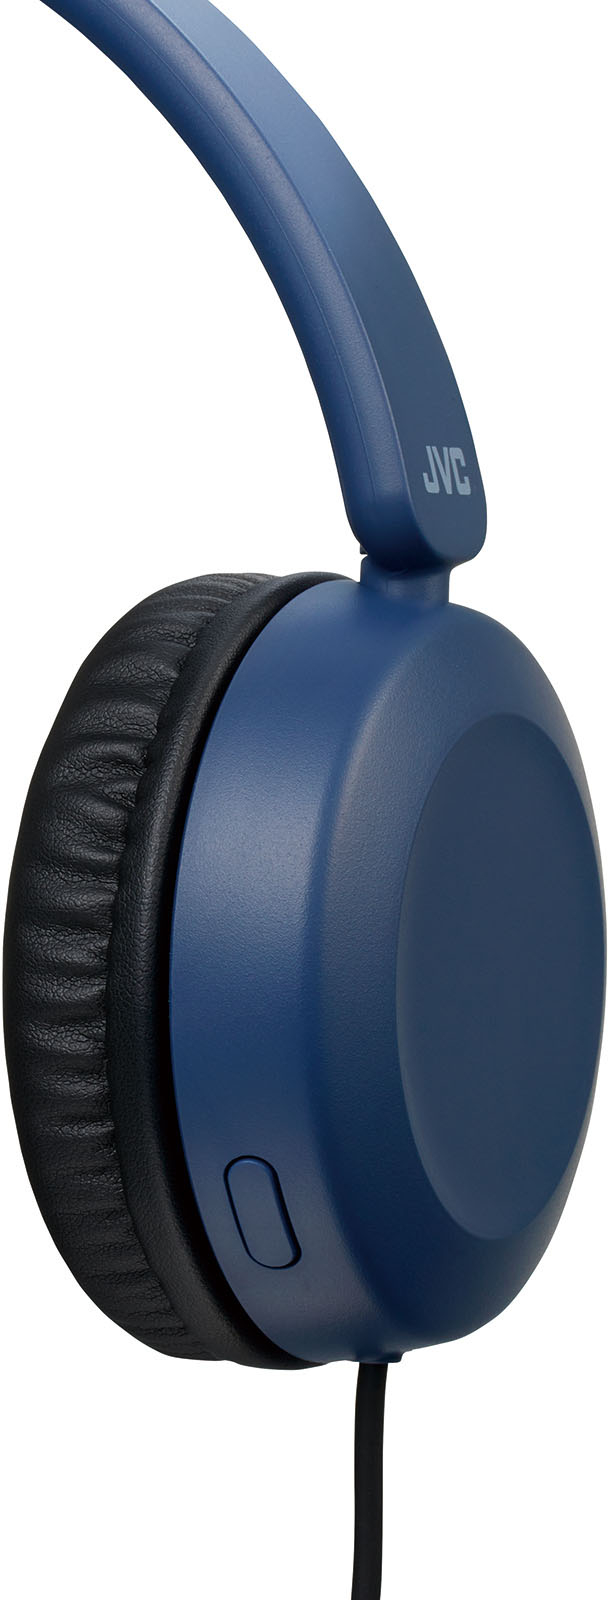 Angle View: Audio-Technica - ATH-M30x On-Ear Headphones - Black